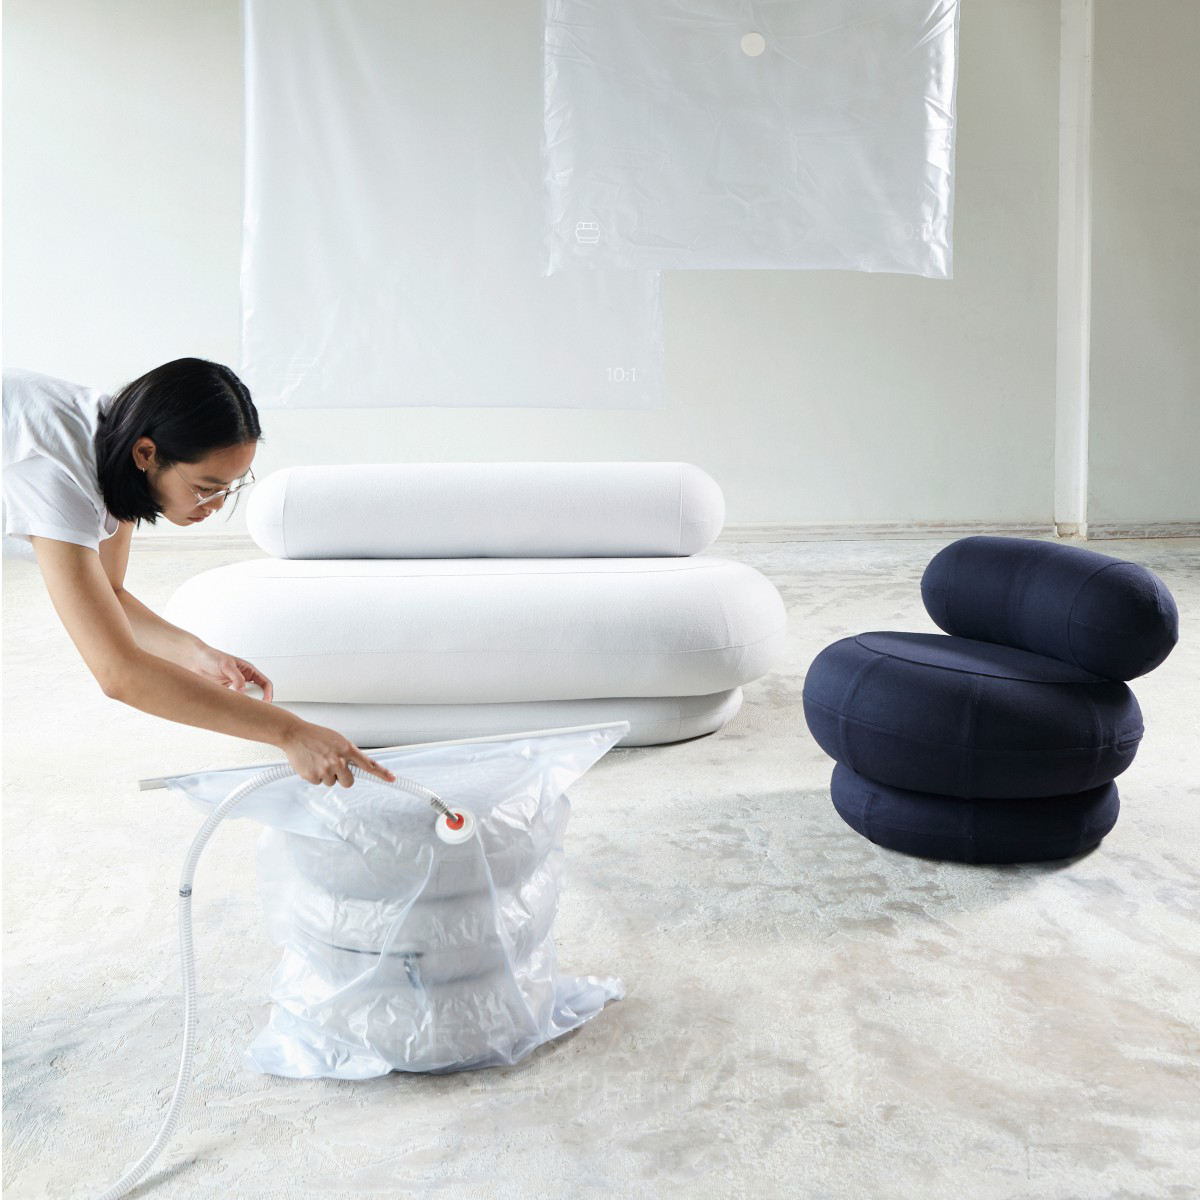 10:1 Compressible Furniture by Christian Hammer Juhl